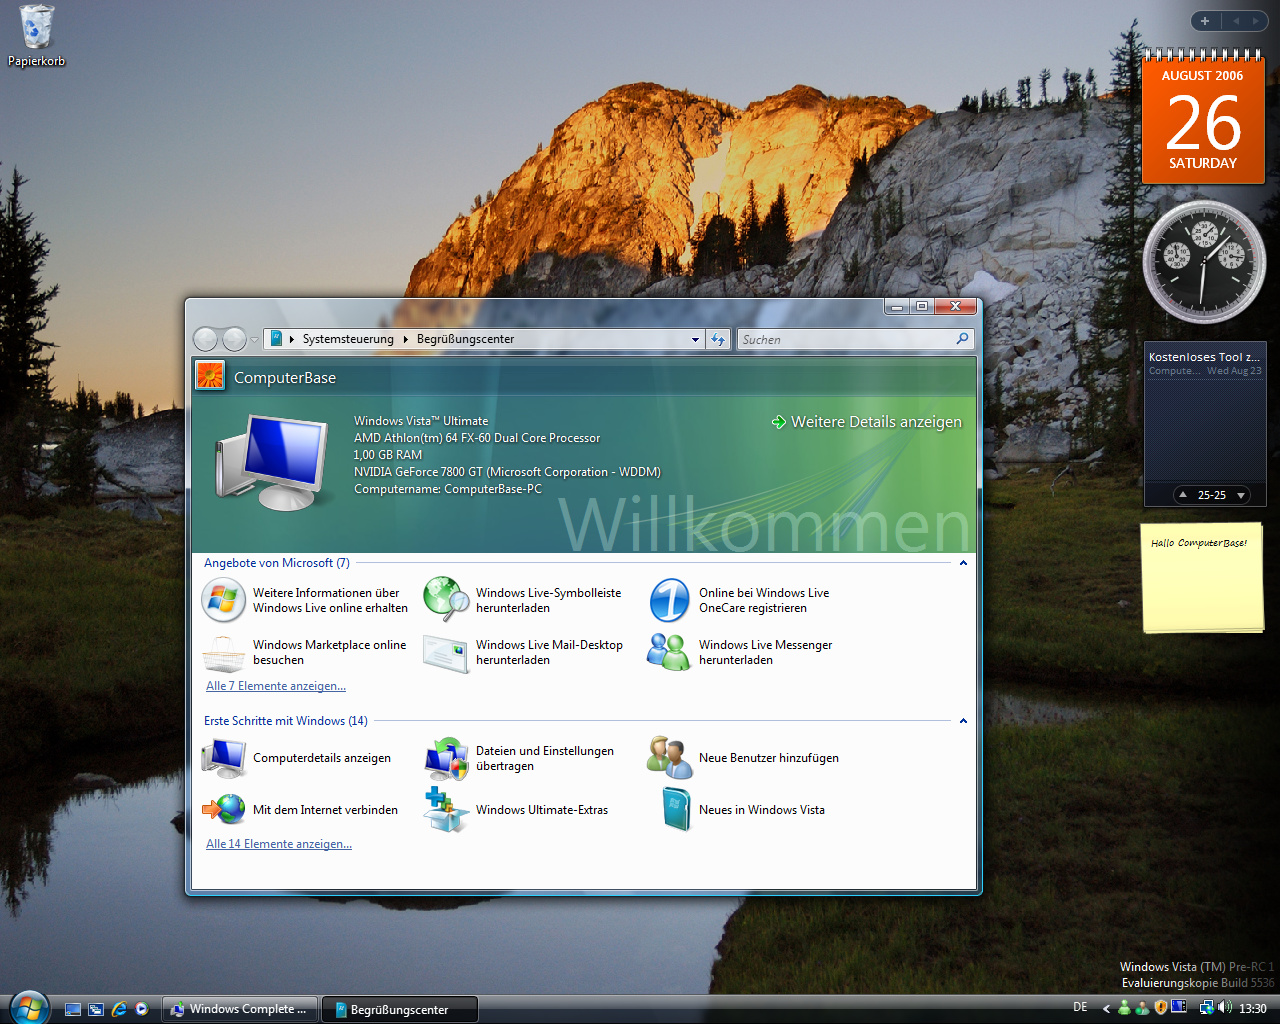 Windows Vista Build 5536 - Begrüßungscenter